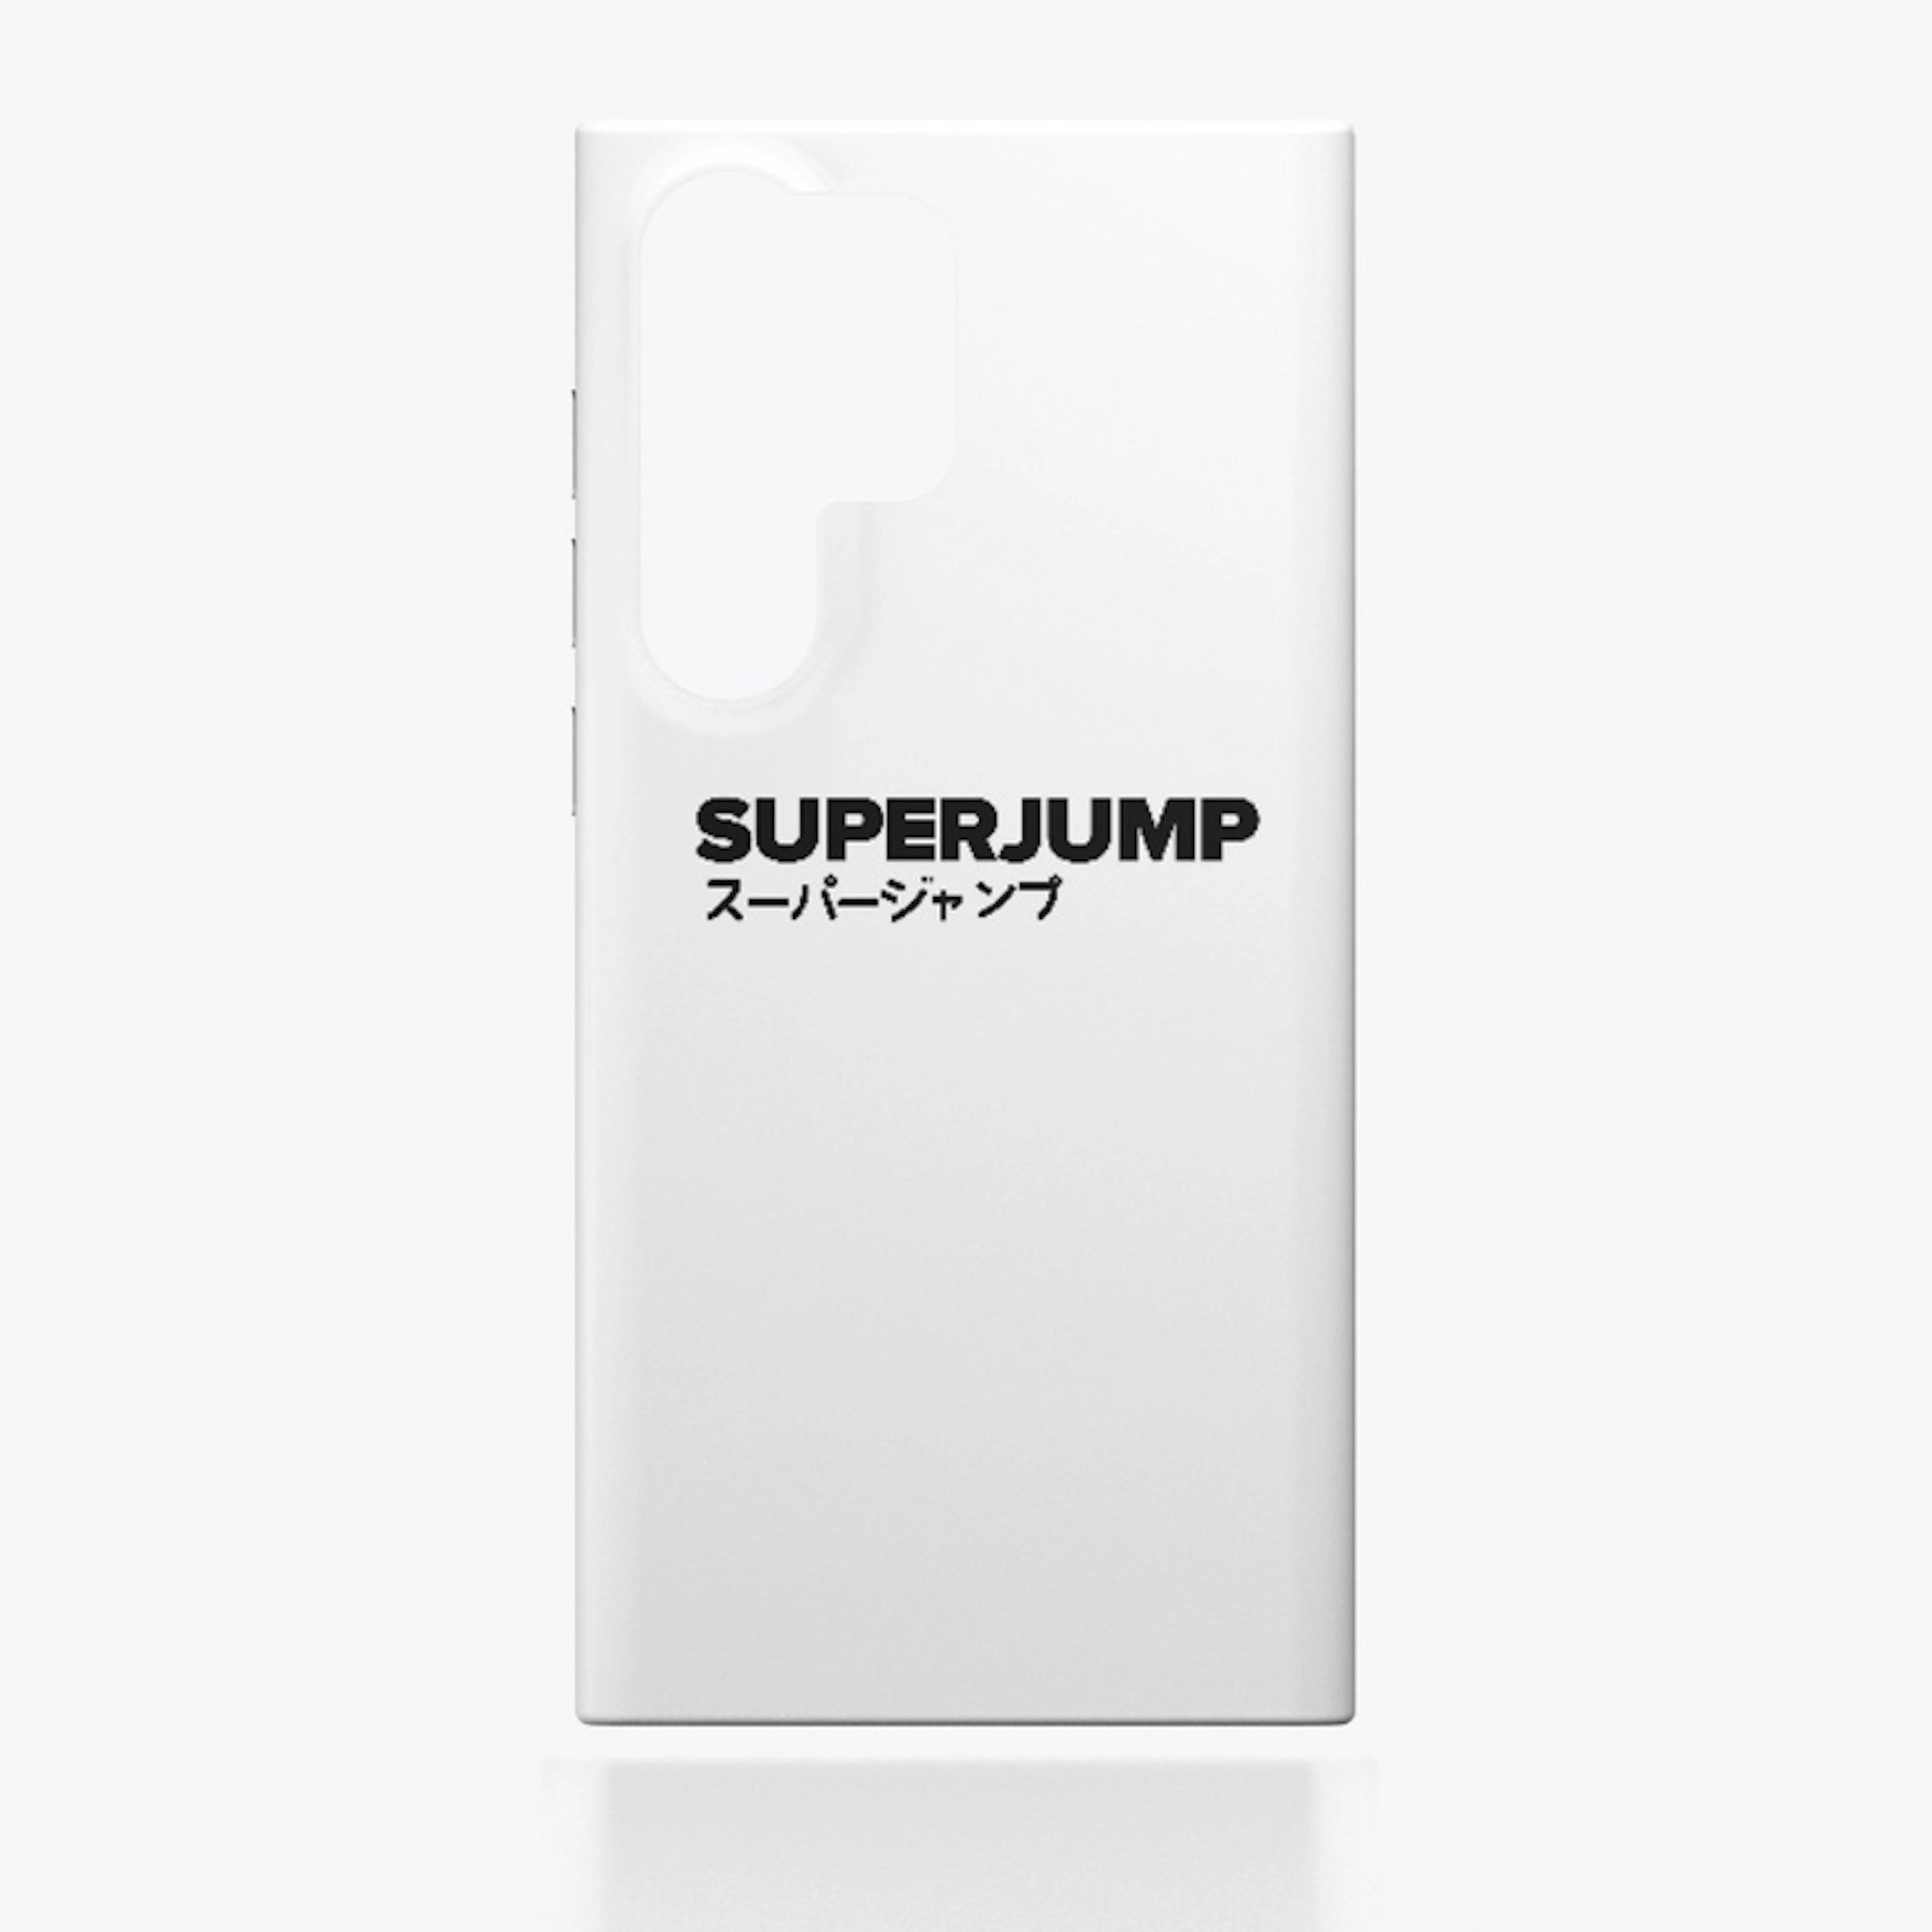 SUPERJUMP Black Logo